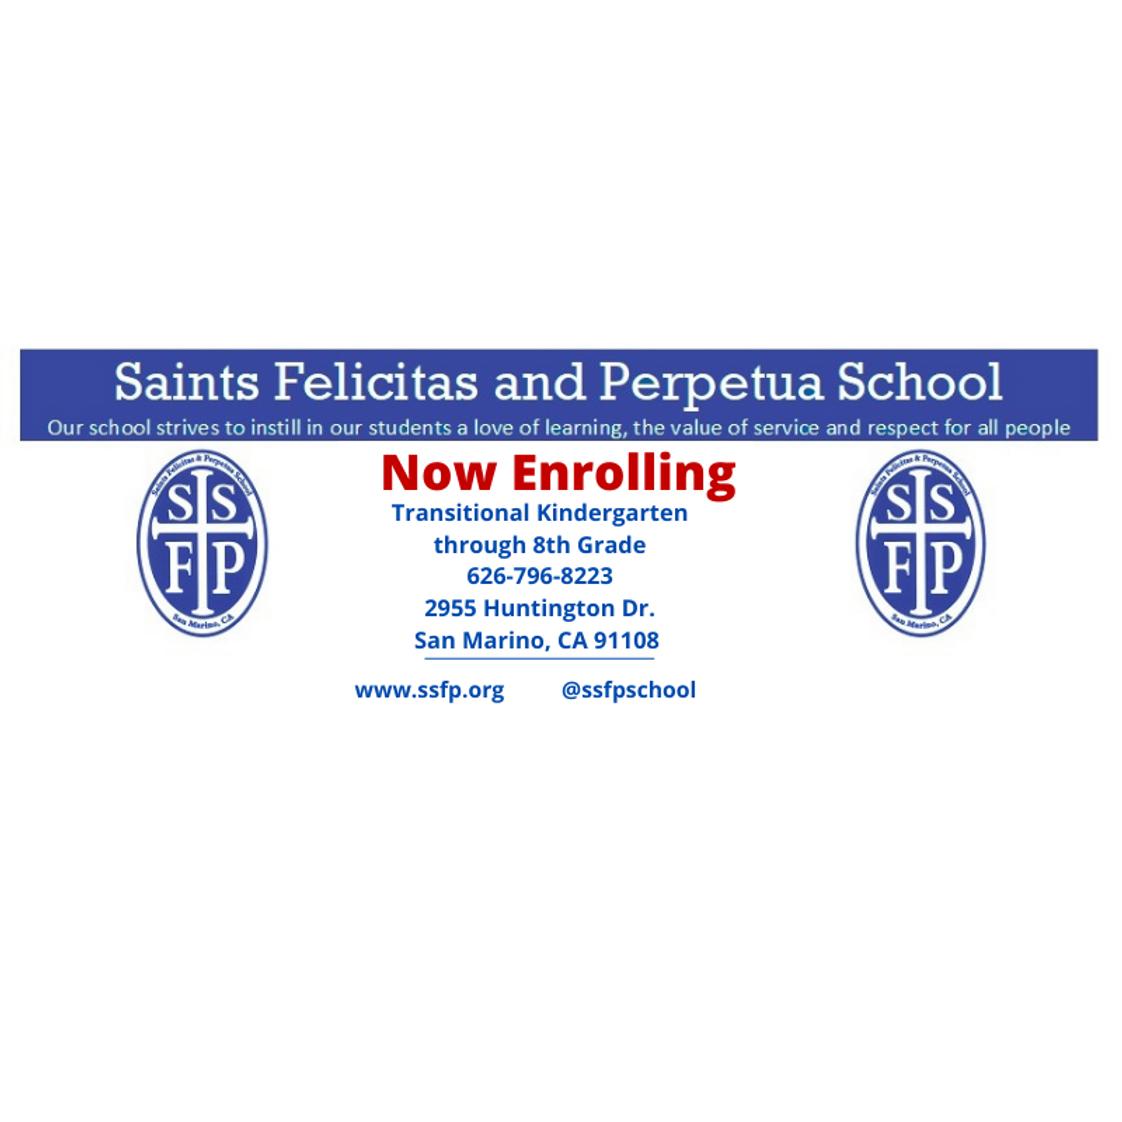 SS. Felicitas & Perpetua School Photo #1 - Now Enrolling: www.ssfp.org